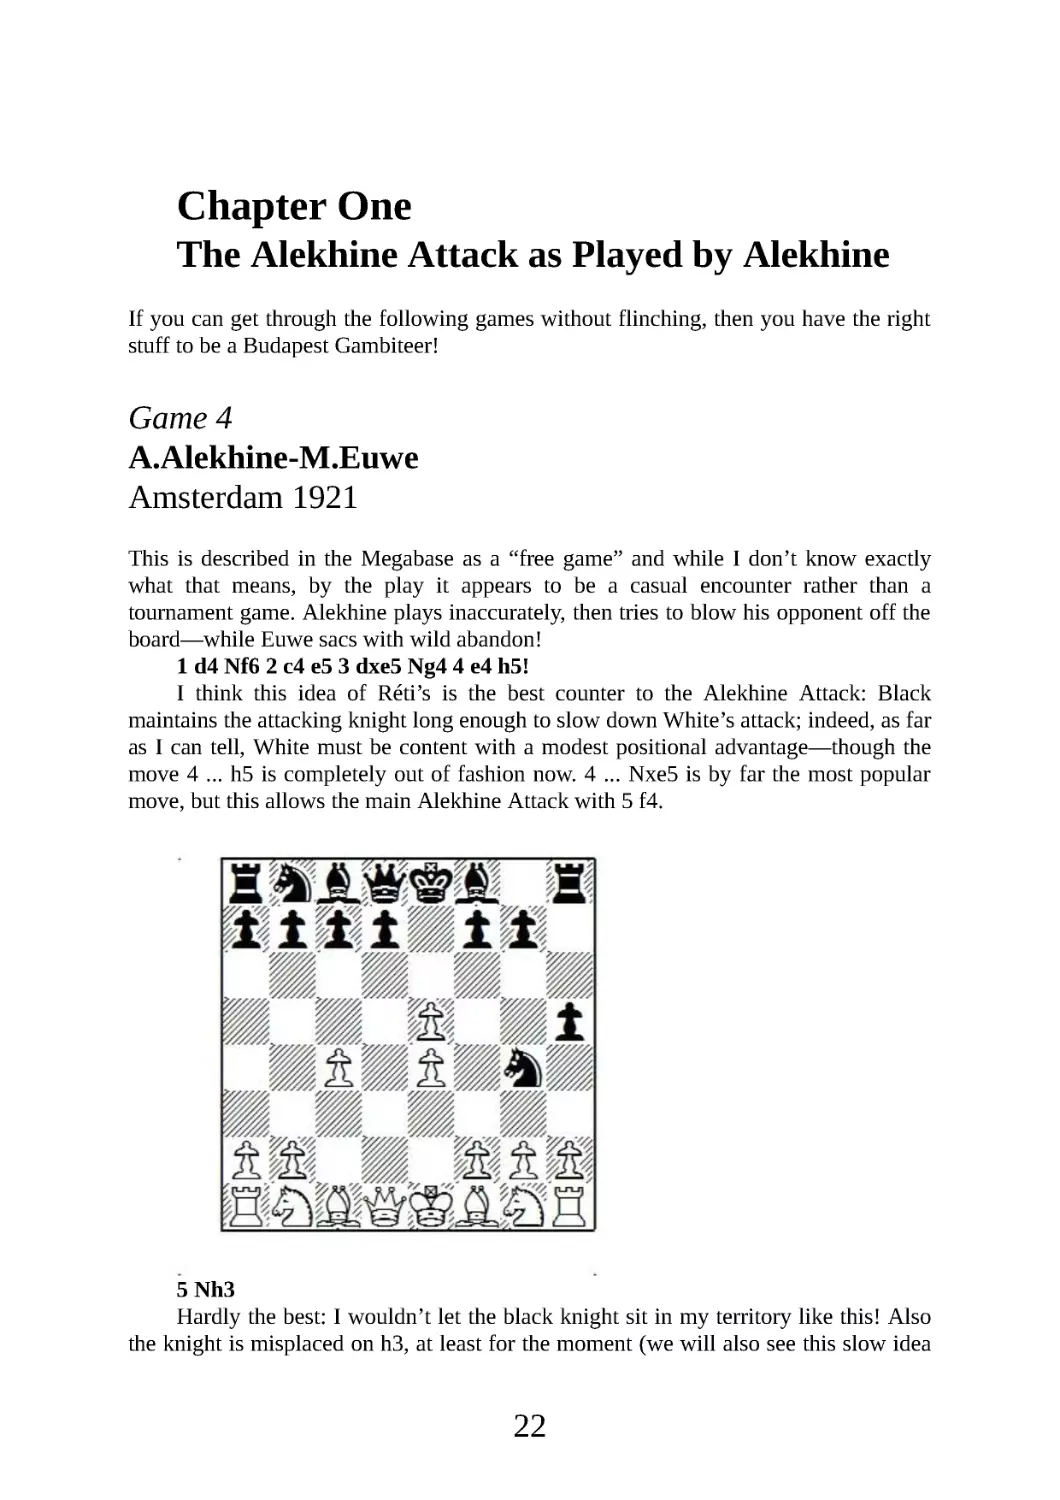 1 The Alekhine Attack as played by Alekhine
Alekhine.A-Euwe.M, Amsterdam 1921